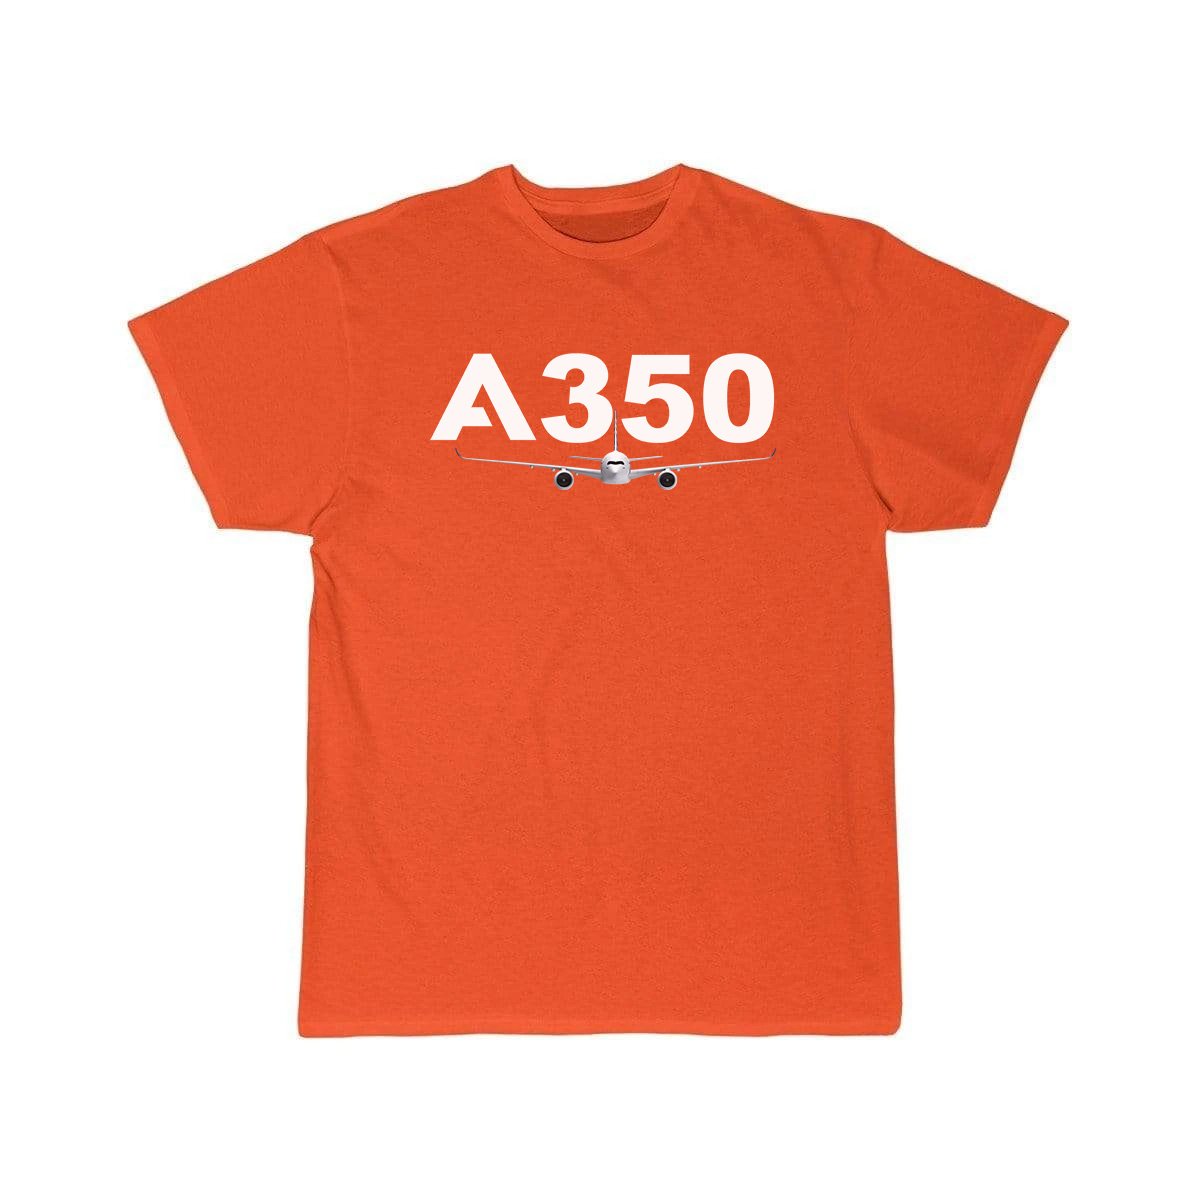 Airbus A350 Aviation Pilot T-Shirt THE AV8R